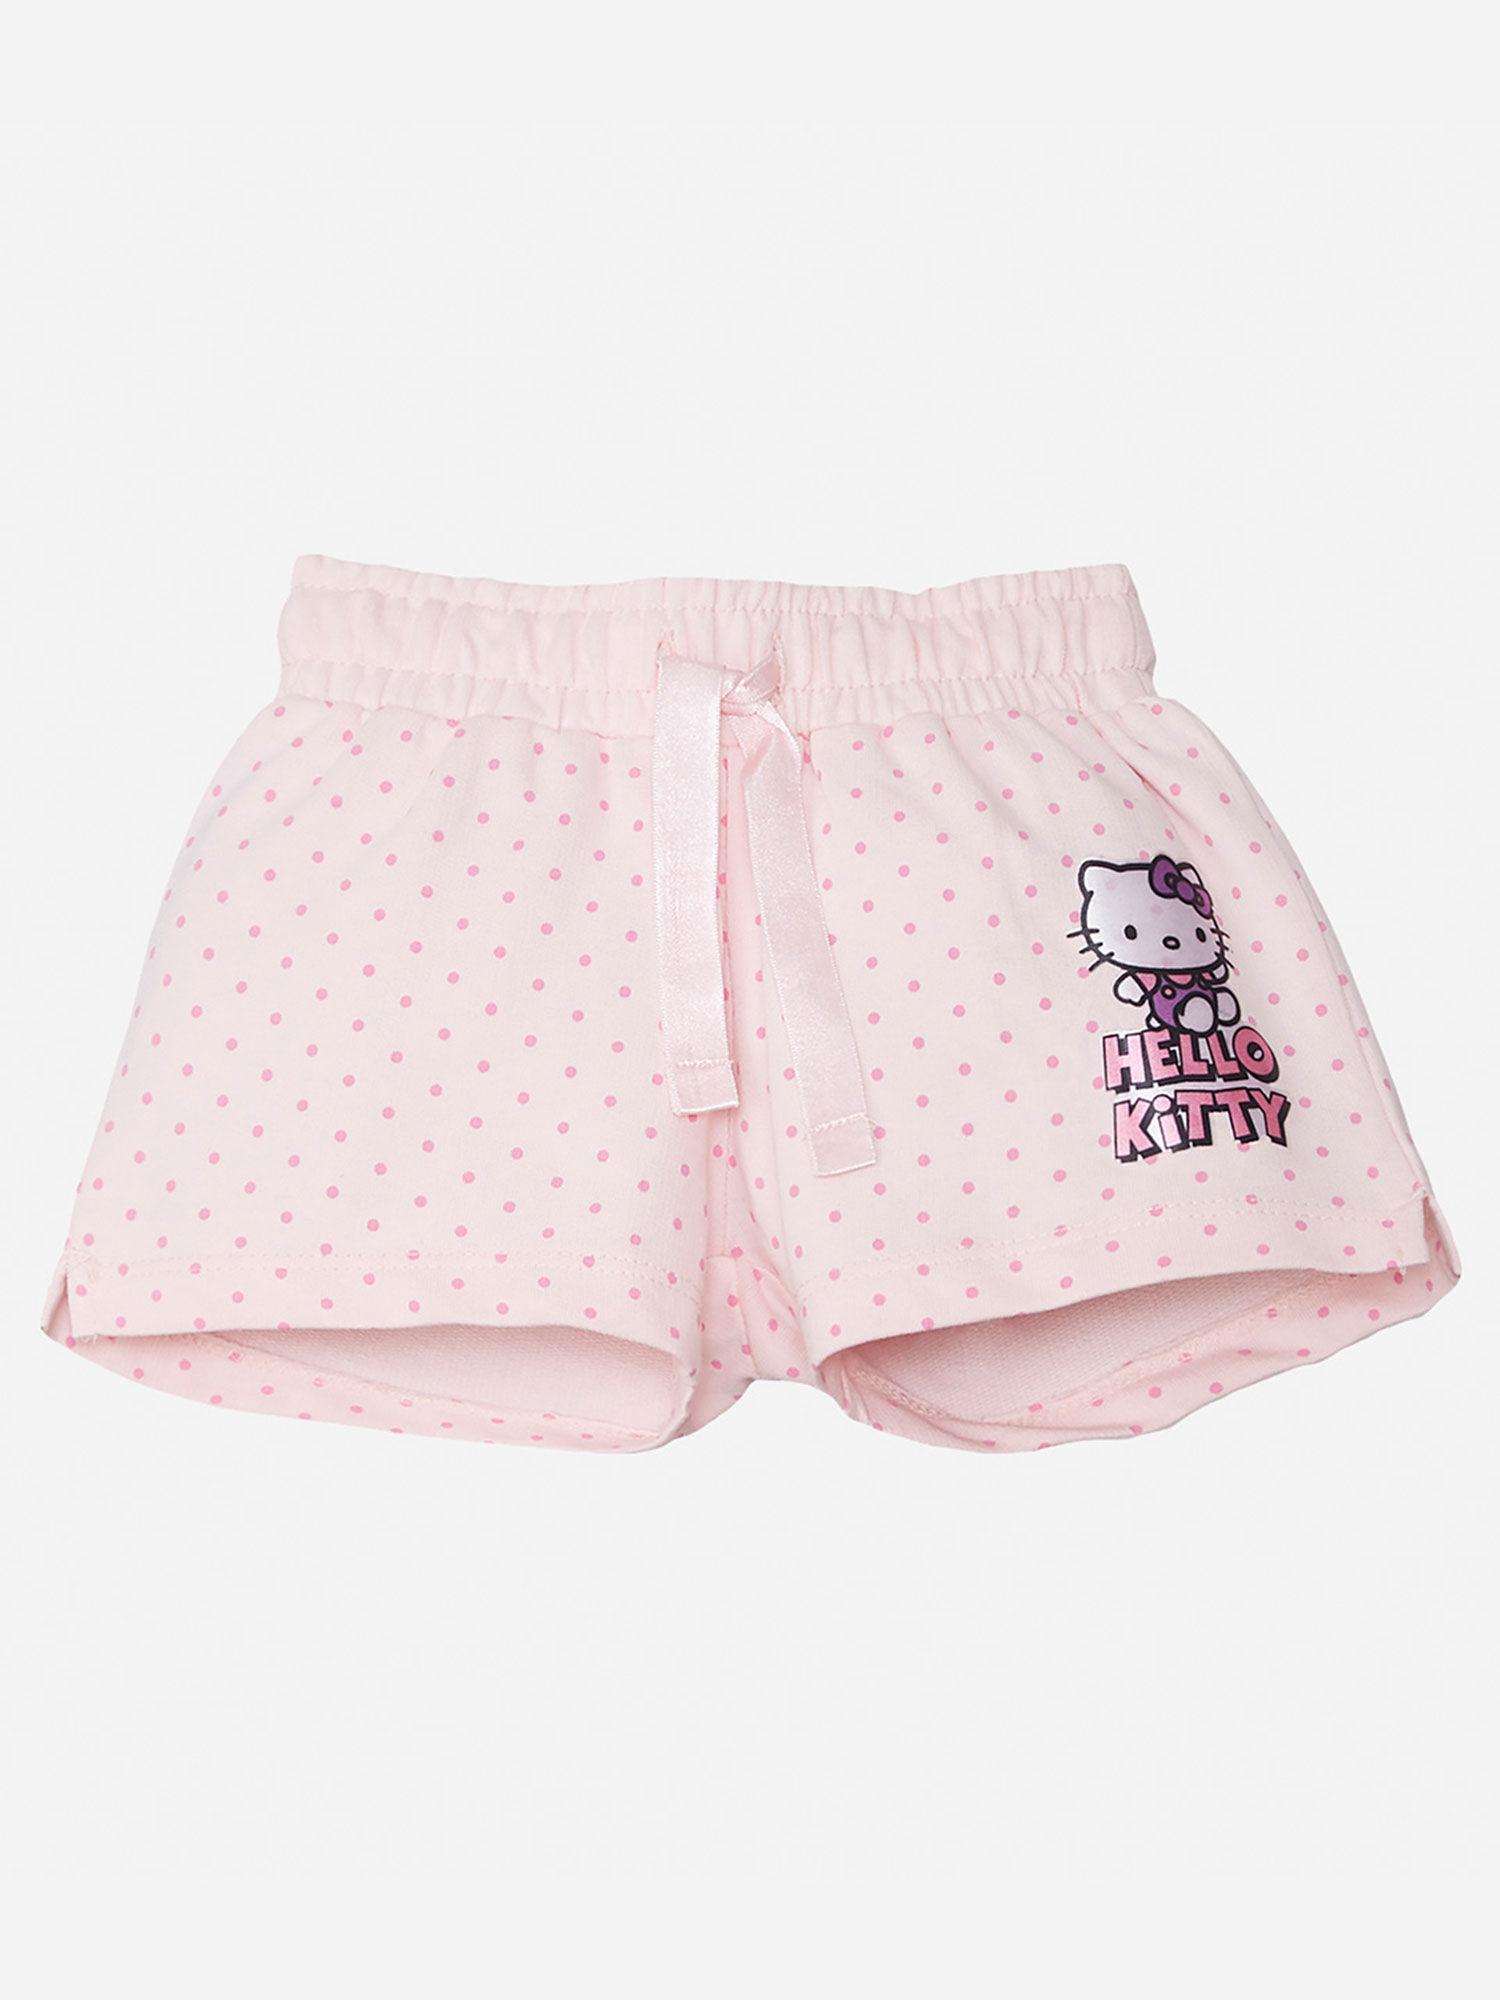 hello-kitty-pink-shorts